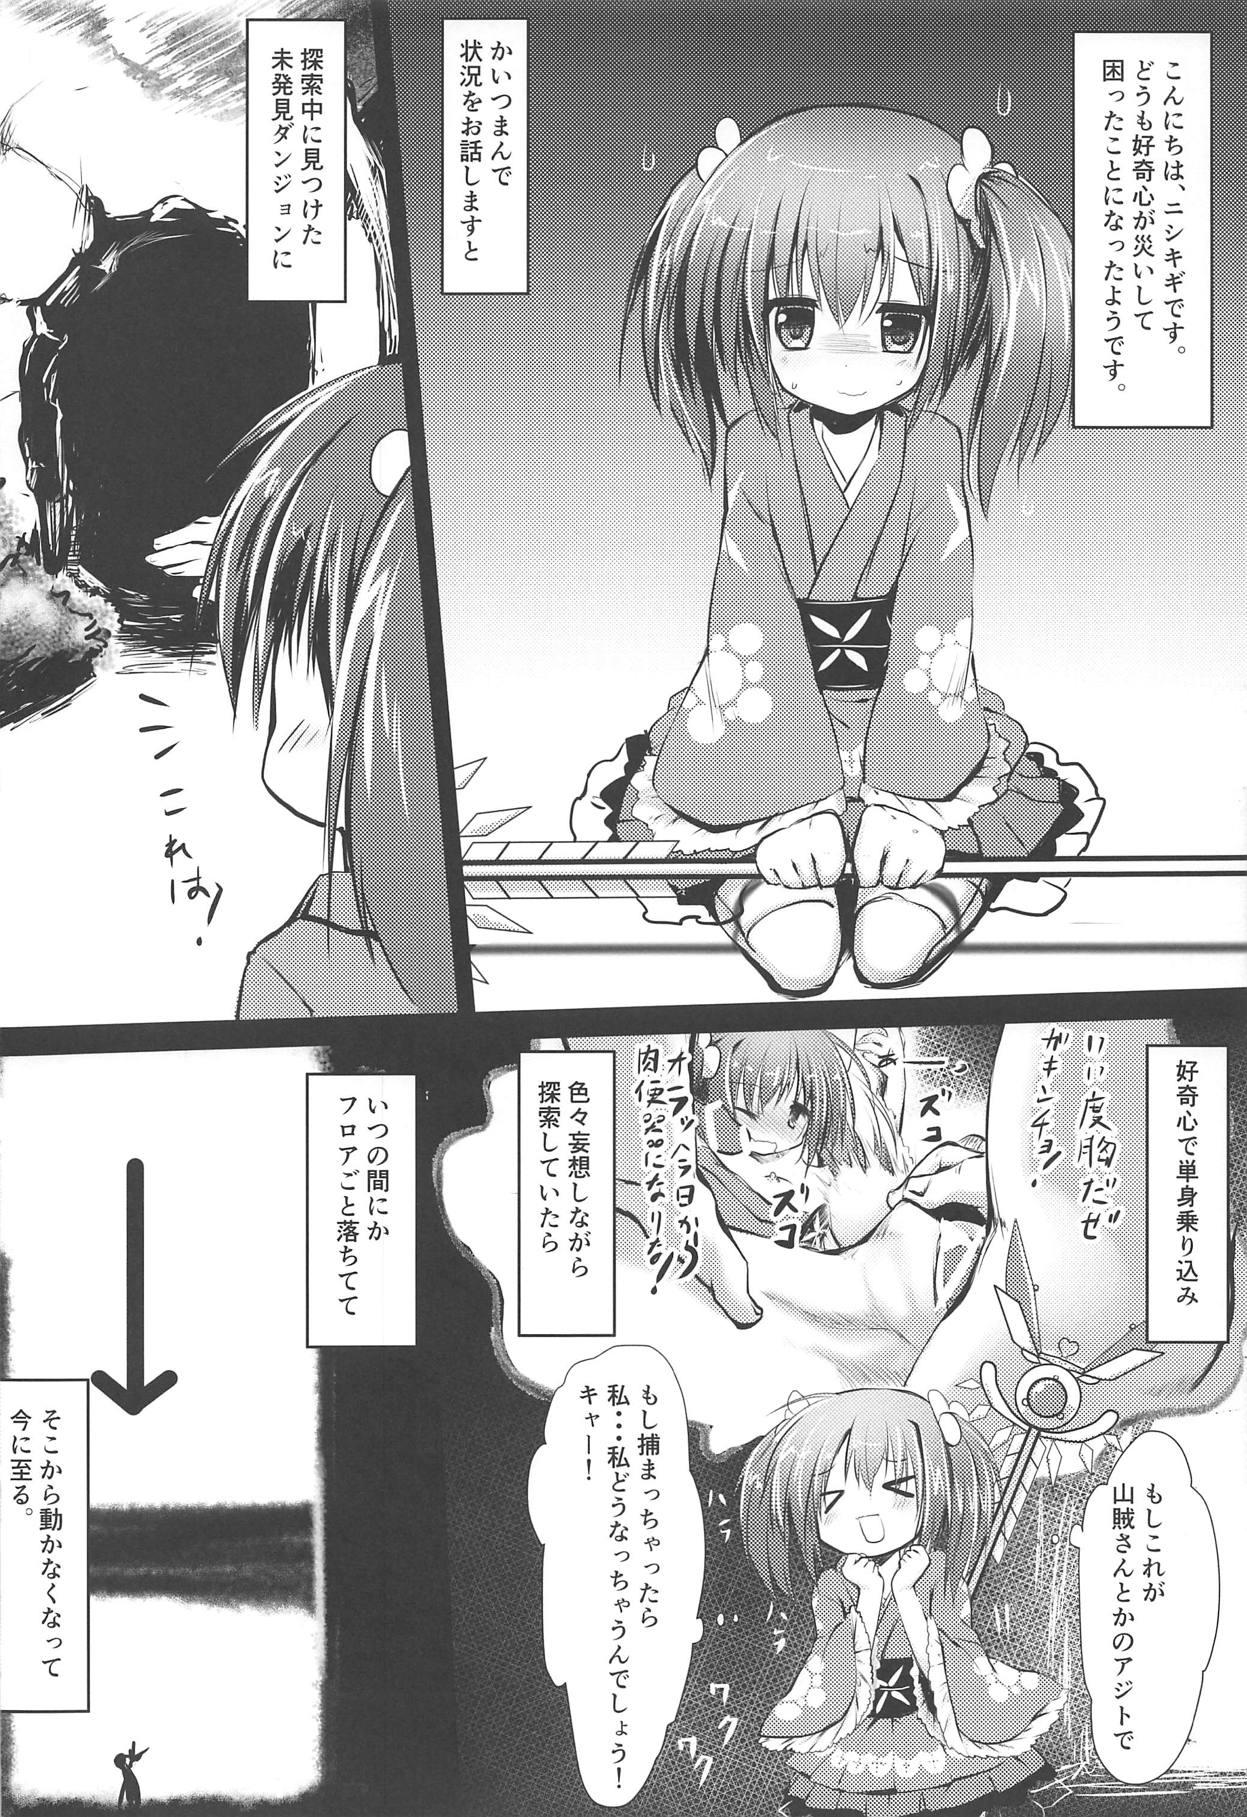 Asslicking Nishikigi VS Ero Trap D - Flower knight girl Amazing - Page 3